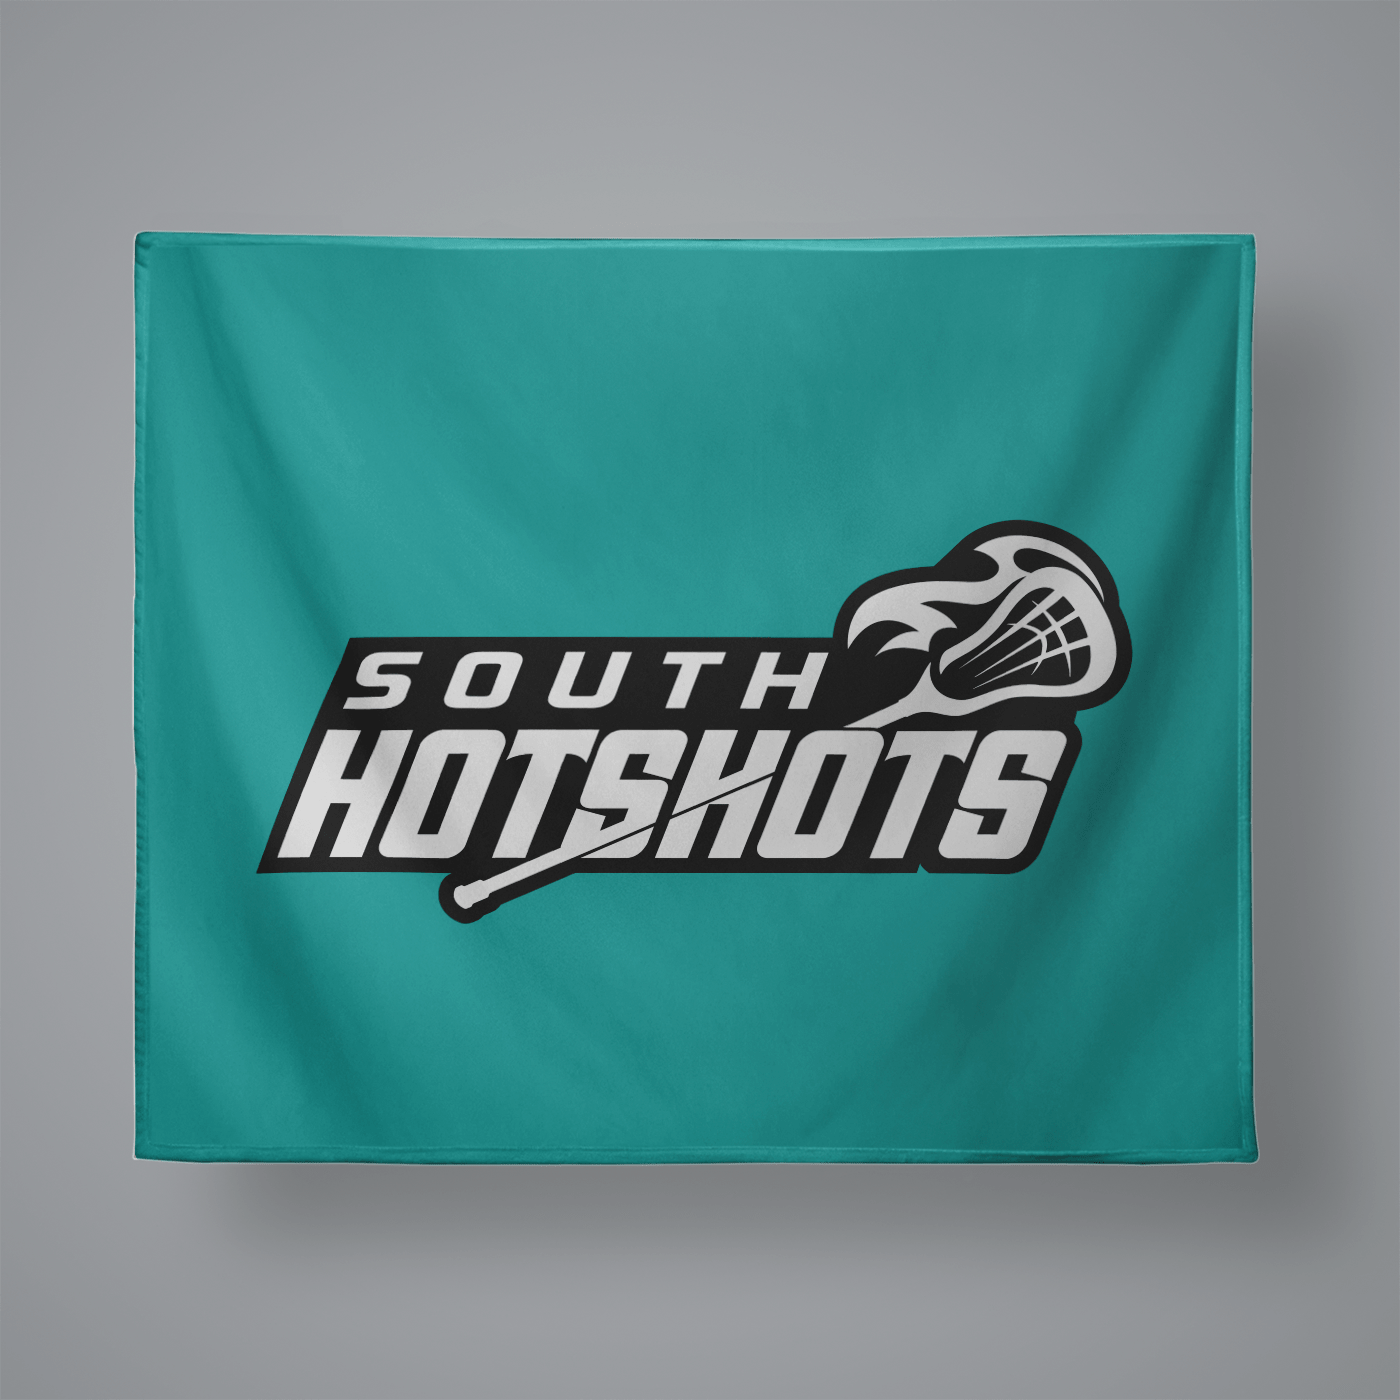 South Hotshots Lacrosse Small Plush Throw Blanket Signature Lacrosse